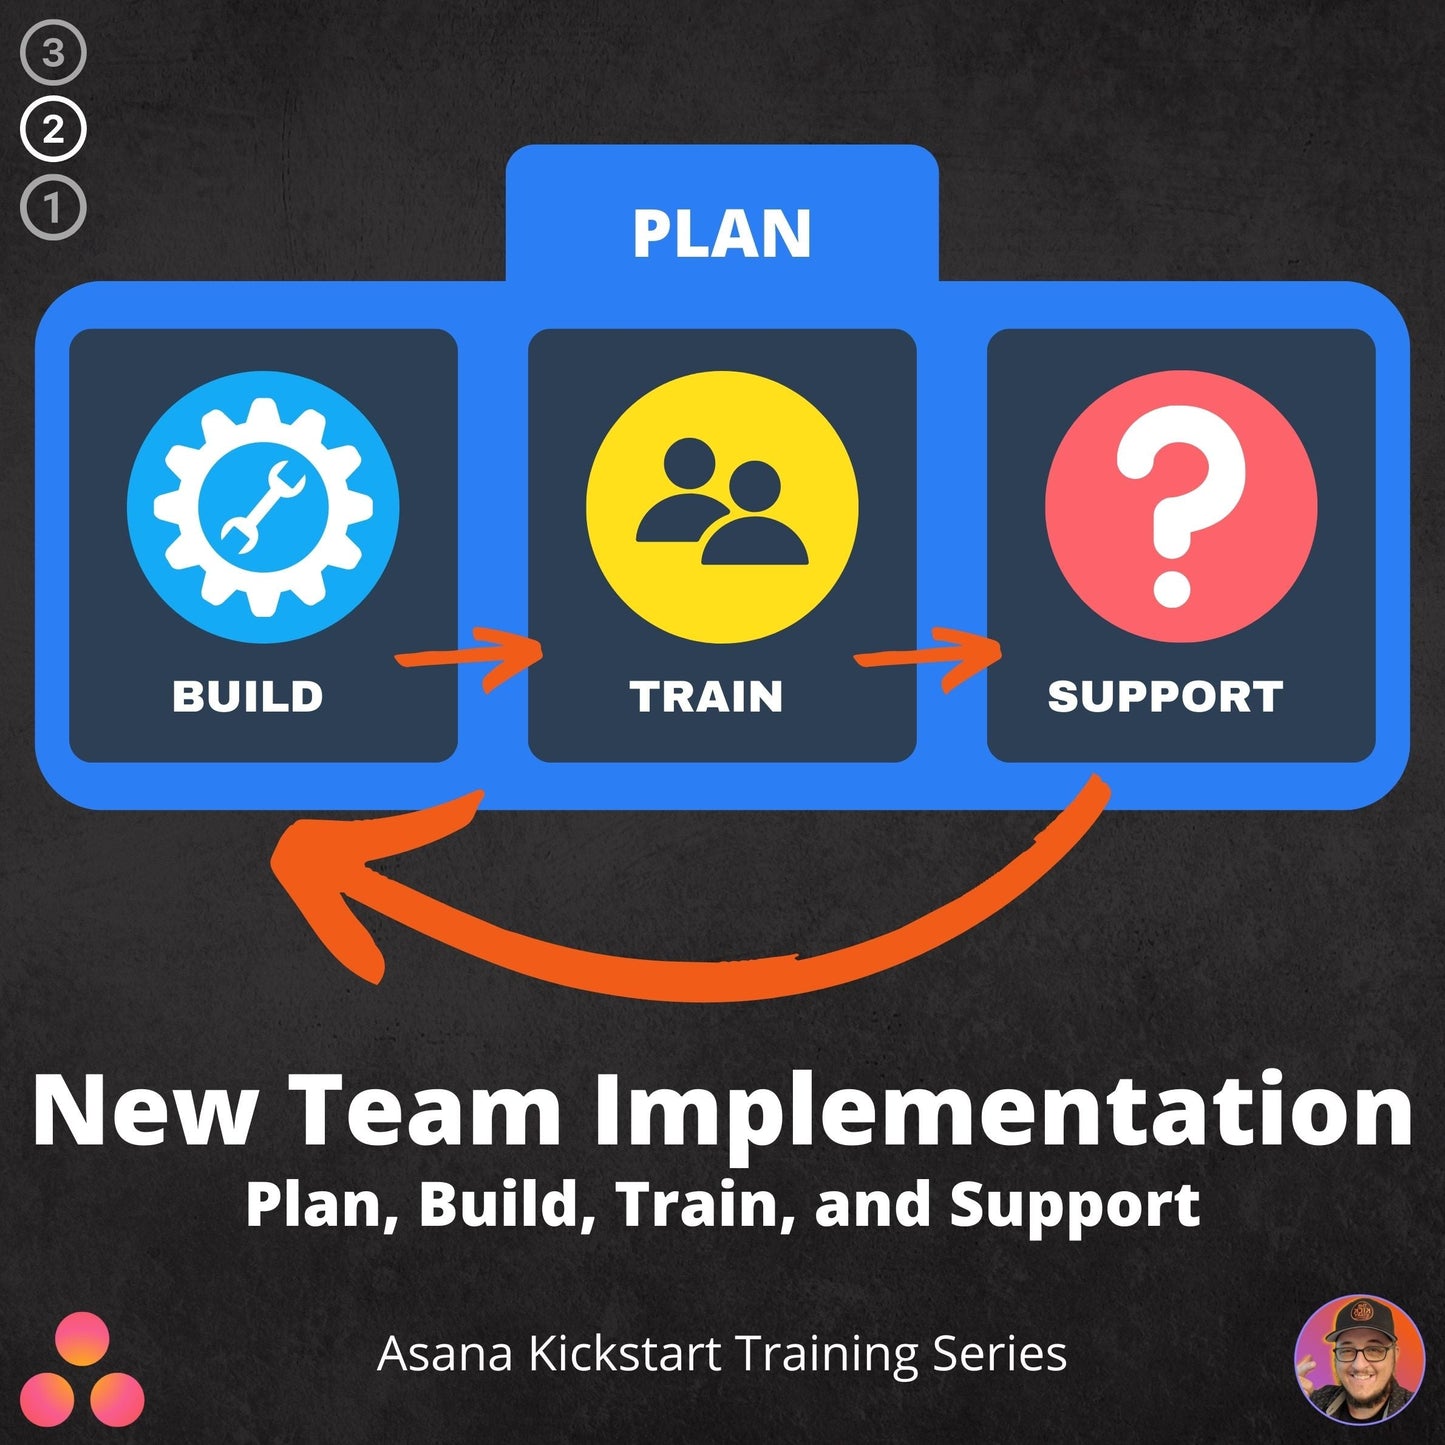 [LEGACY - until July 31st] "Just the Essentials" New Team Implementation | Asana Kickstart Services & Products (2-week sprint)